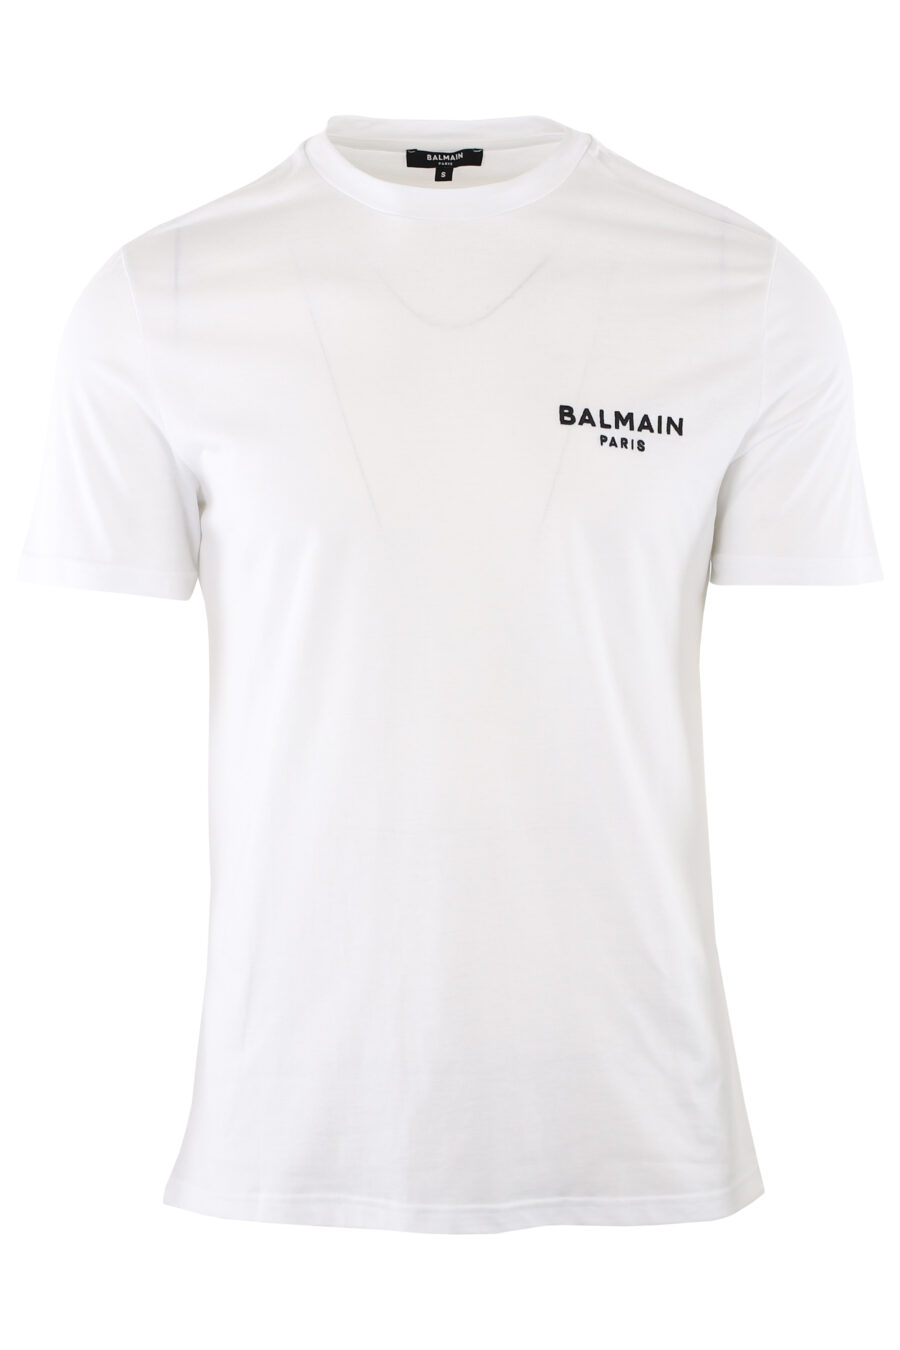 Camiseta blanca con logo negro bordado - IMG 7418